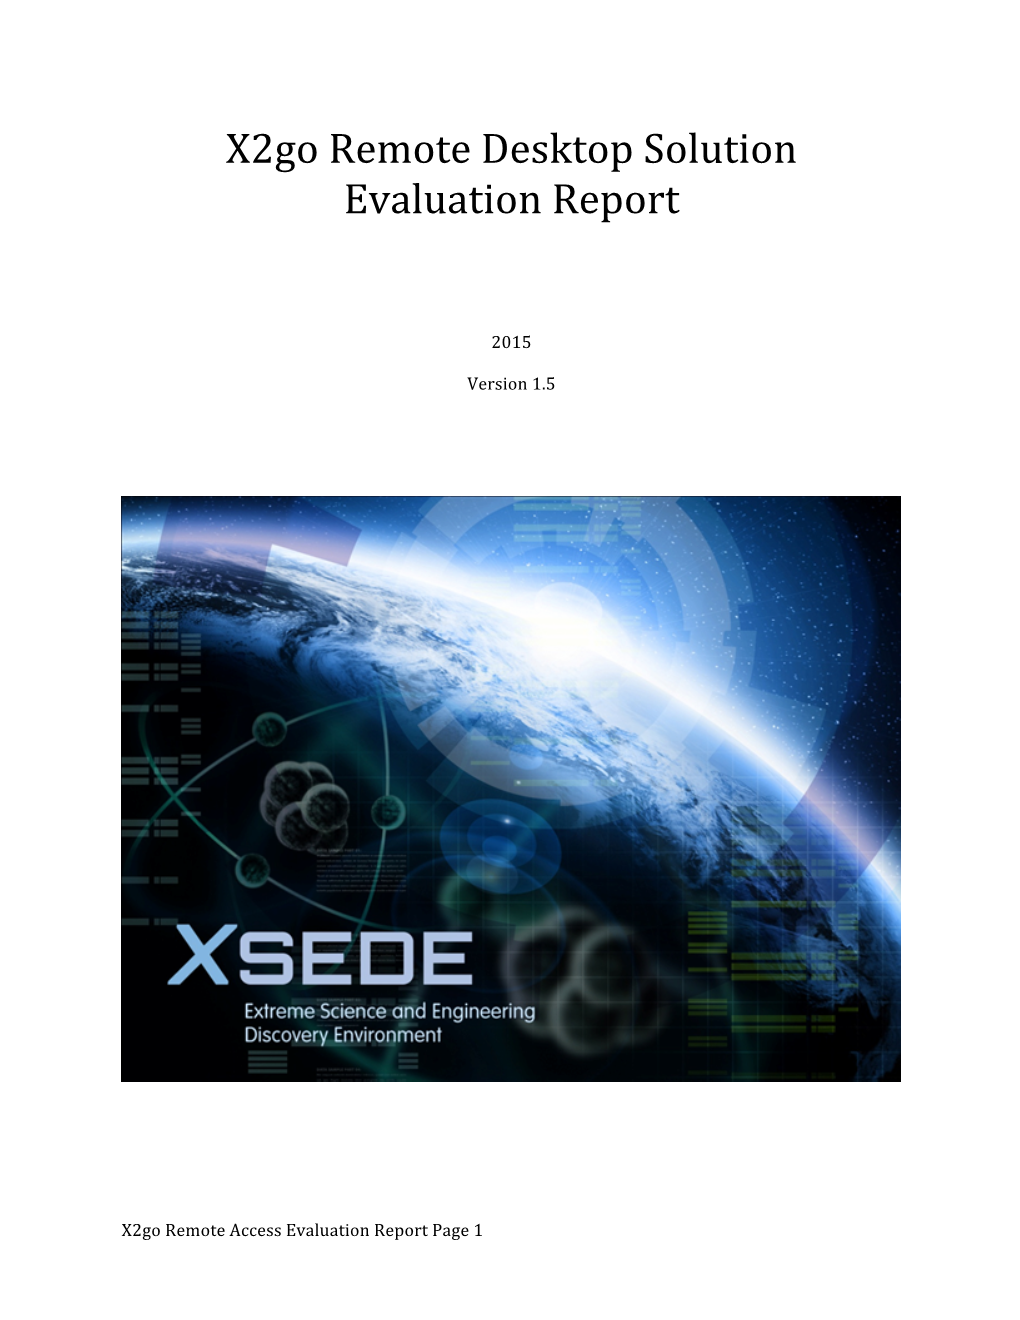 X2go Remote Desktop Solution Evaluation Report